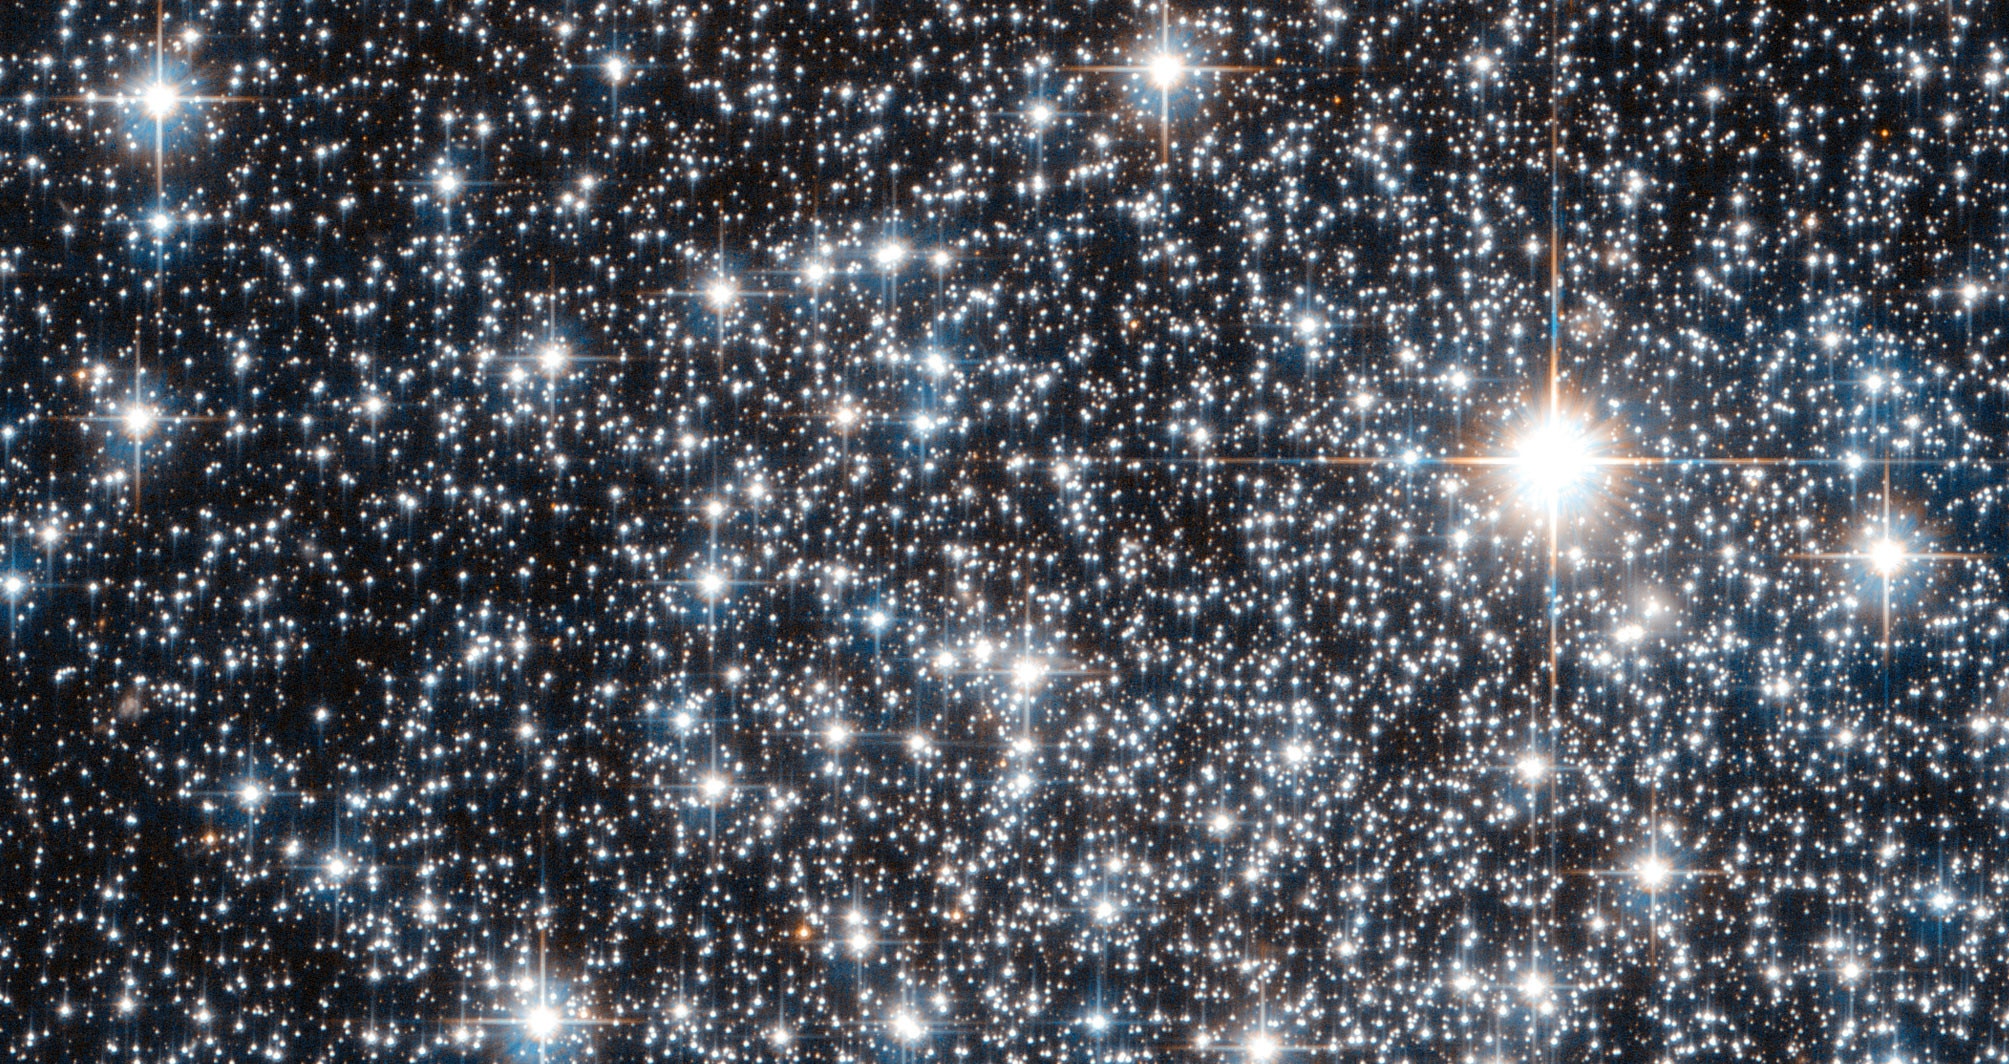 The globular cluster IC 4499. Credit: ESA / Hubble / NASA